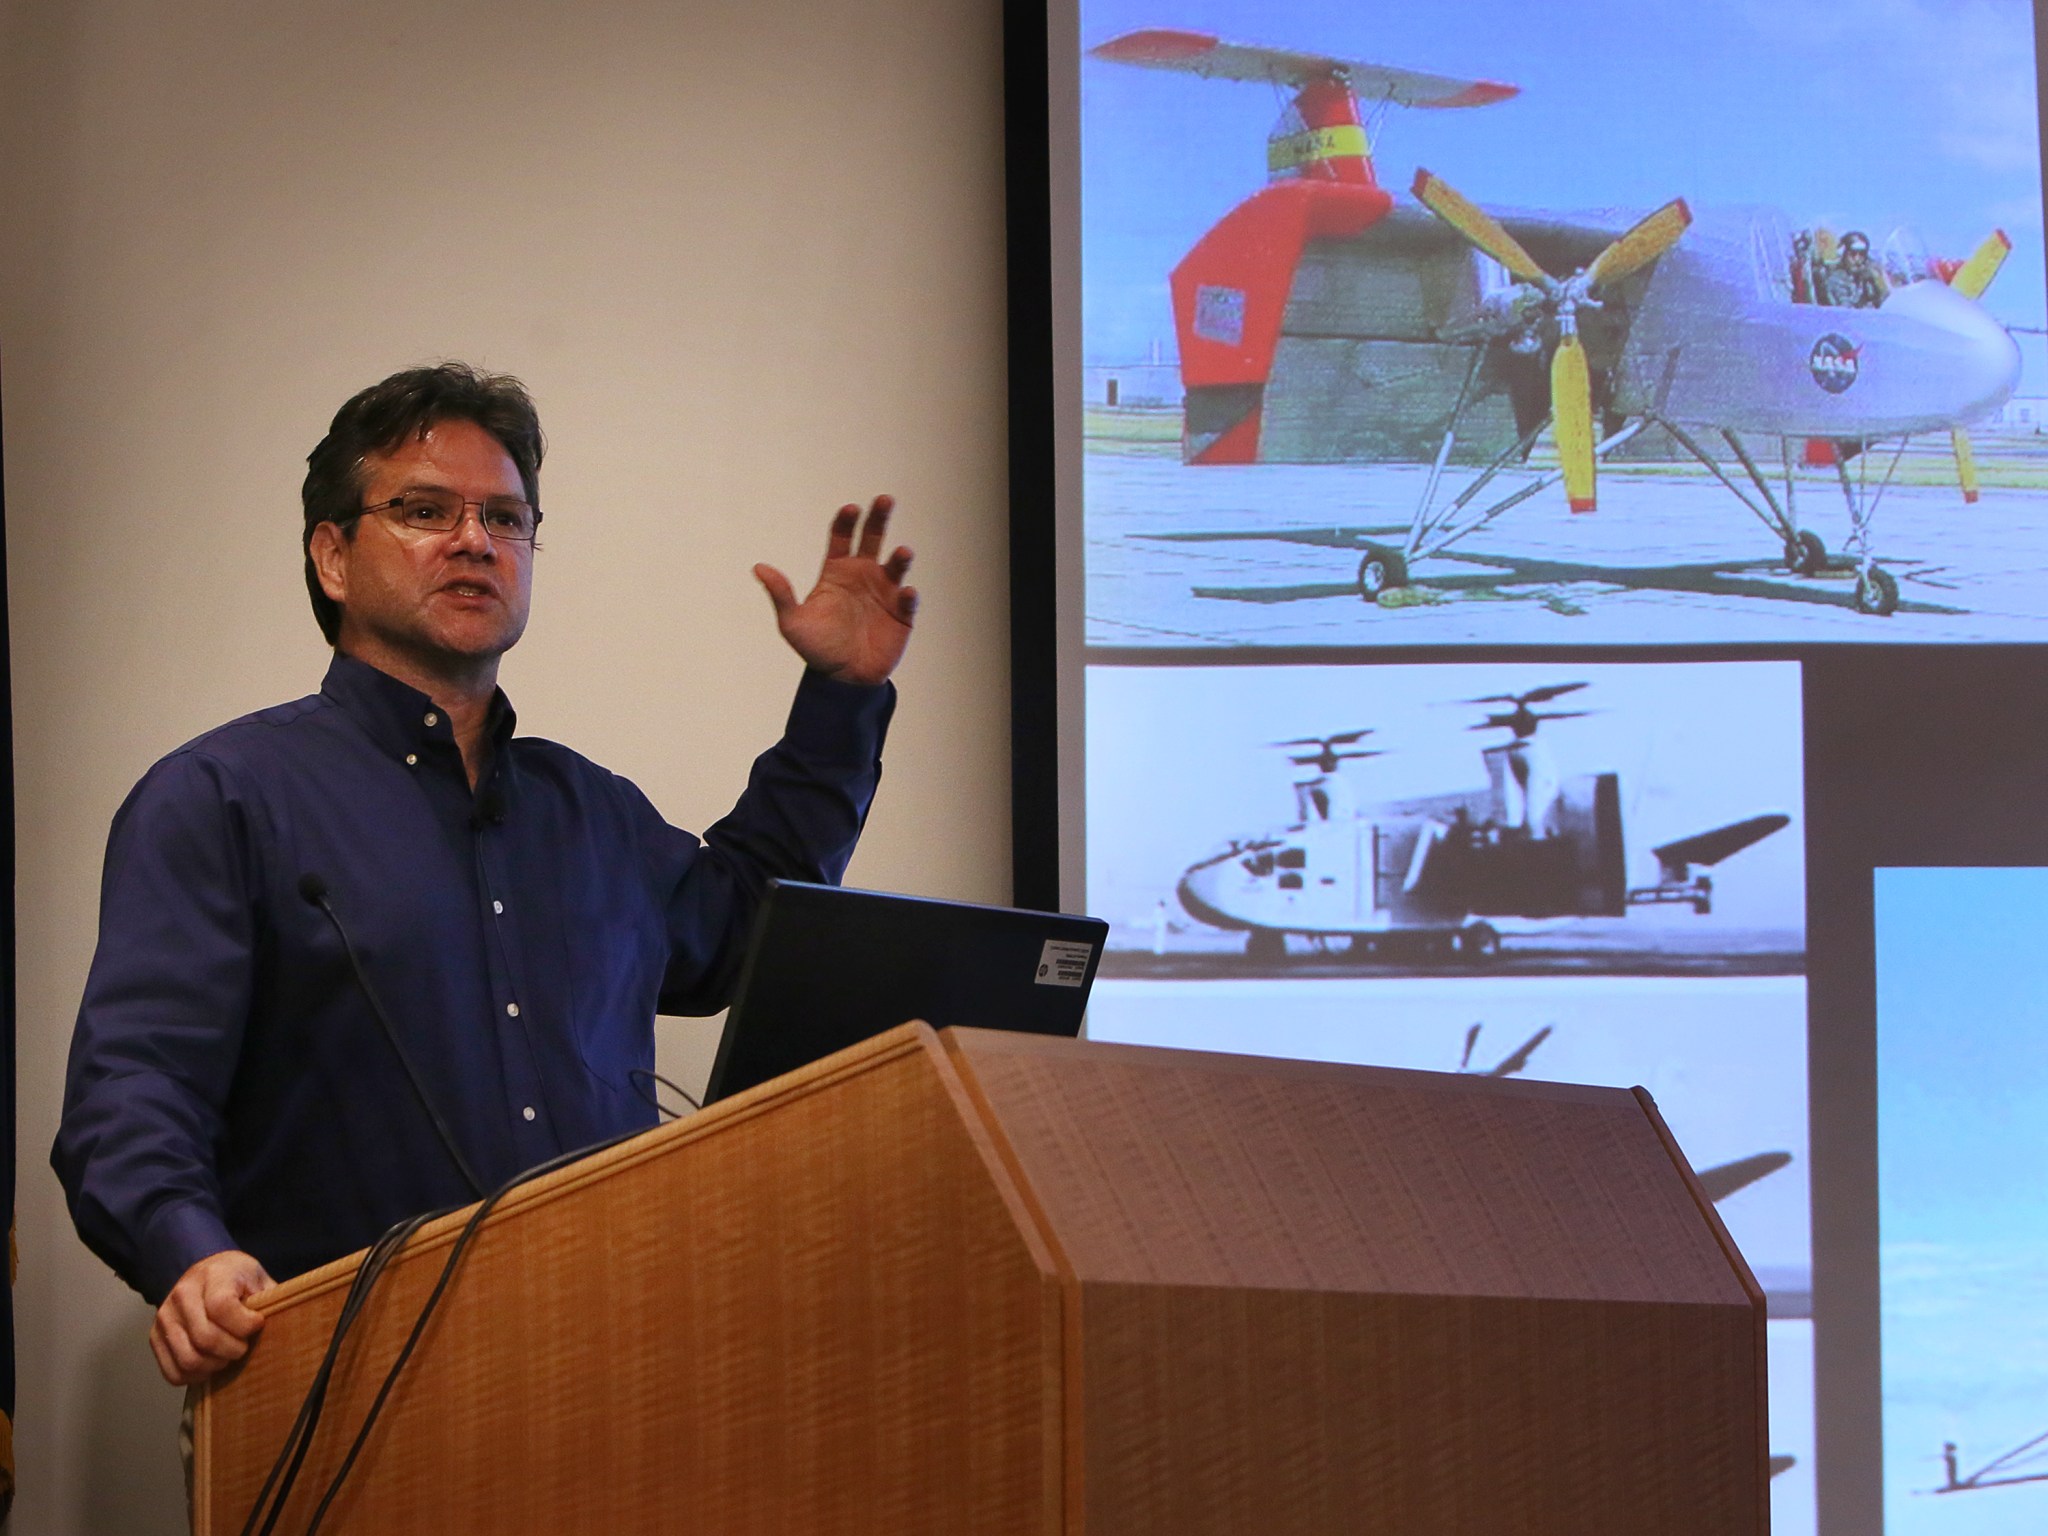 Mark Moore standing at a podium giving a talk on VTOL aircraft.